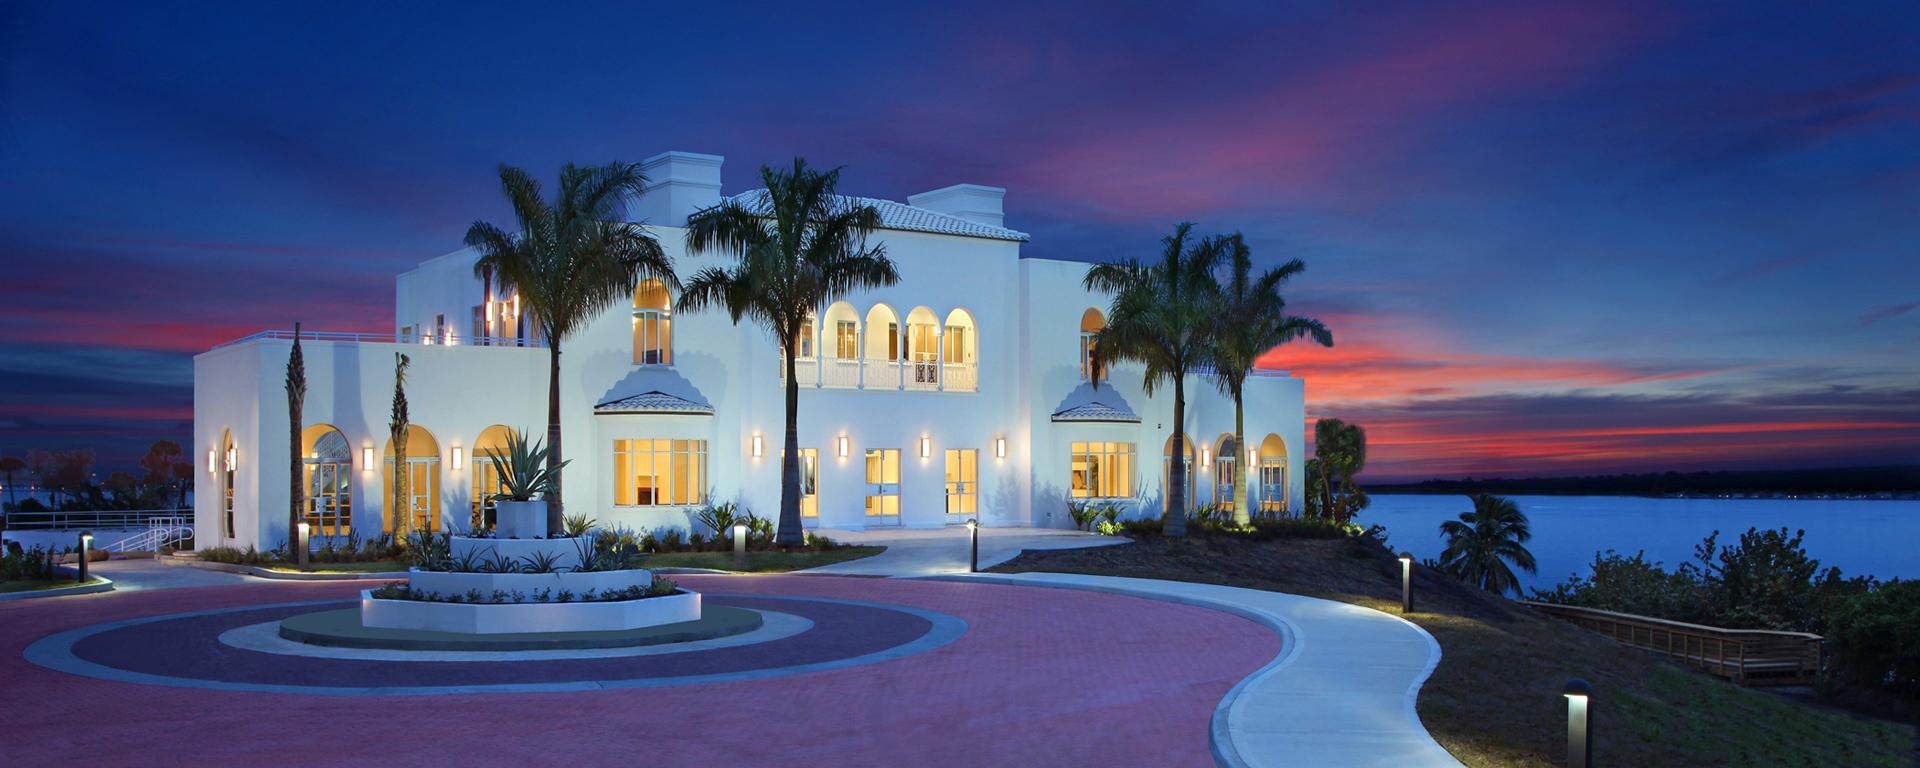 The Mansion At Tuckahoe Martin County Florida